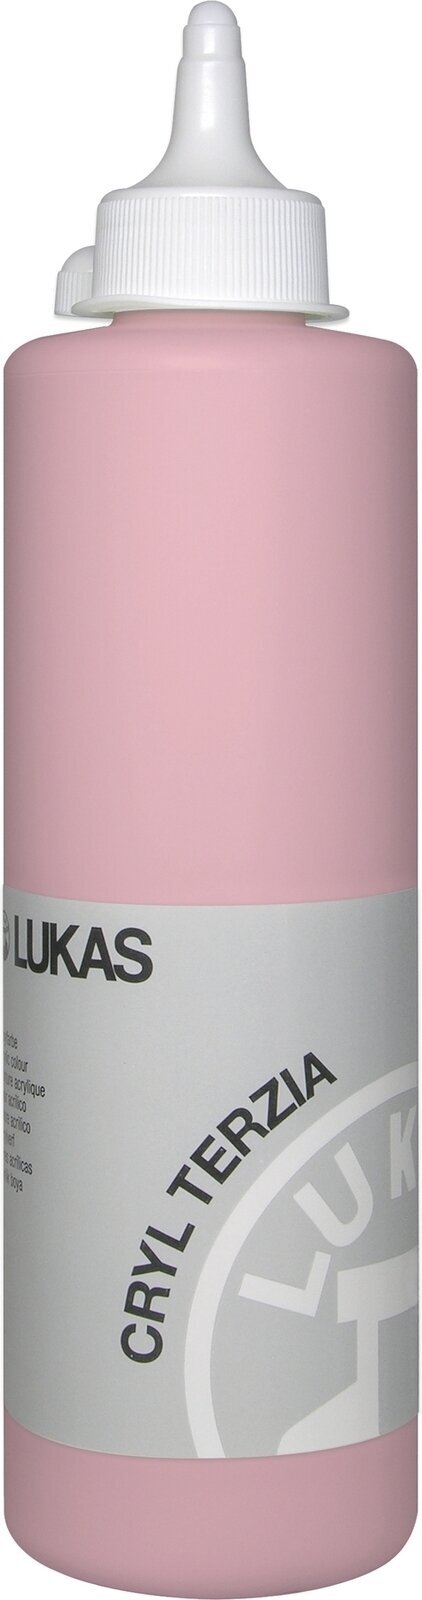 Akrilna barva Lukas Cryl Terzia Acrylic Paint Plastic Bottle Akrilna barva Peach Pink 500 ml 1 kos